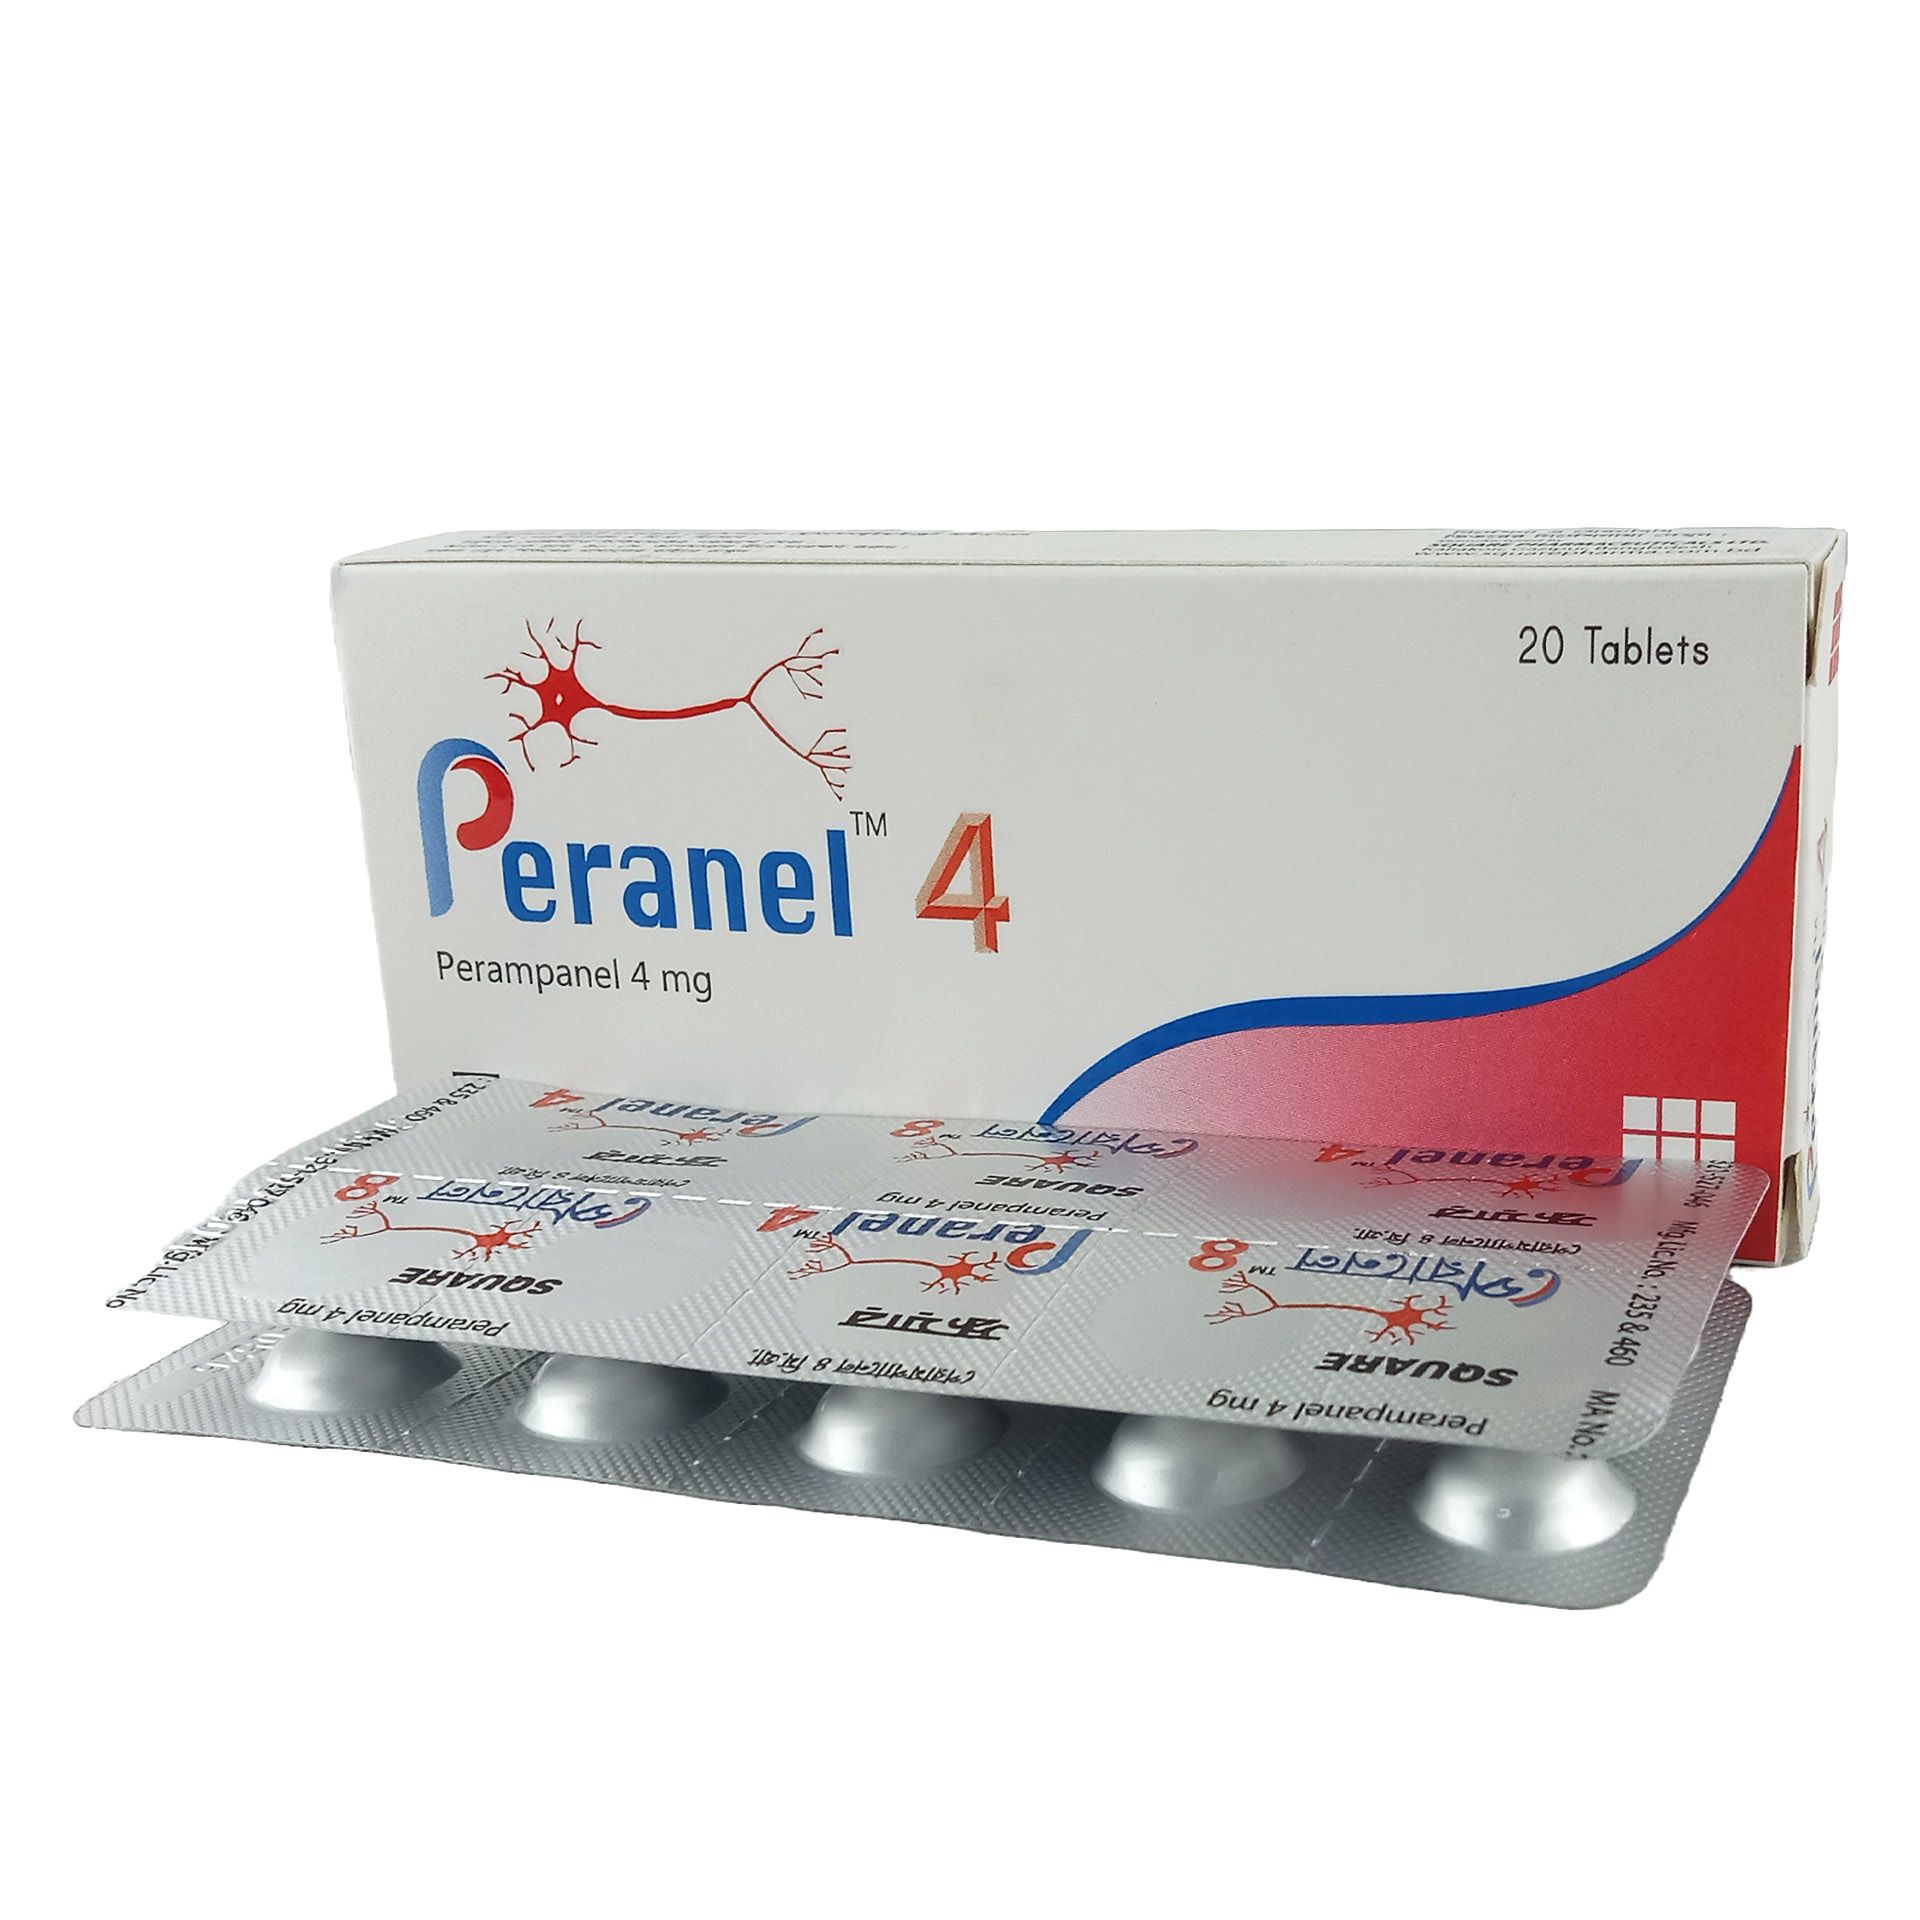 Peranel 4mg Tablet